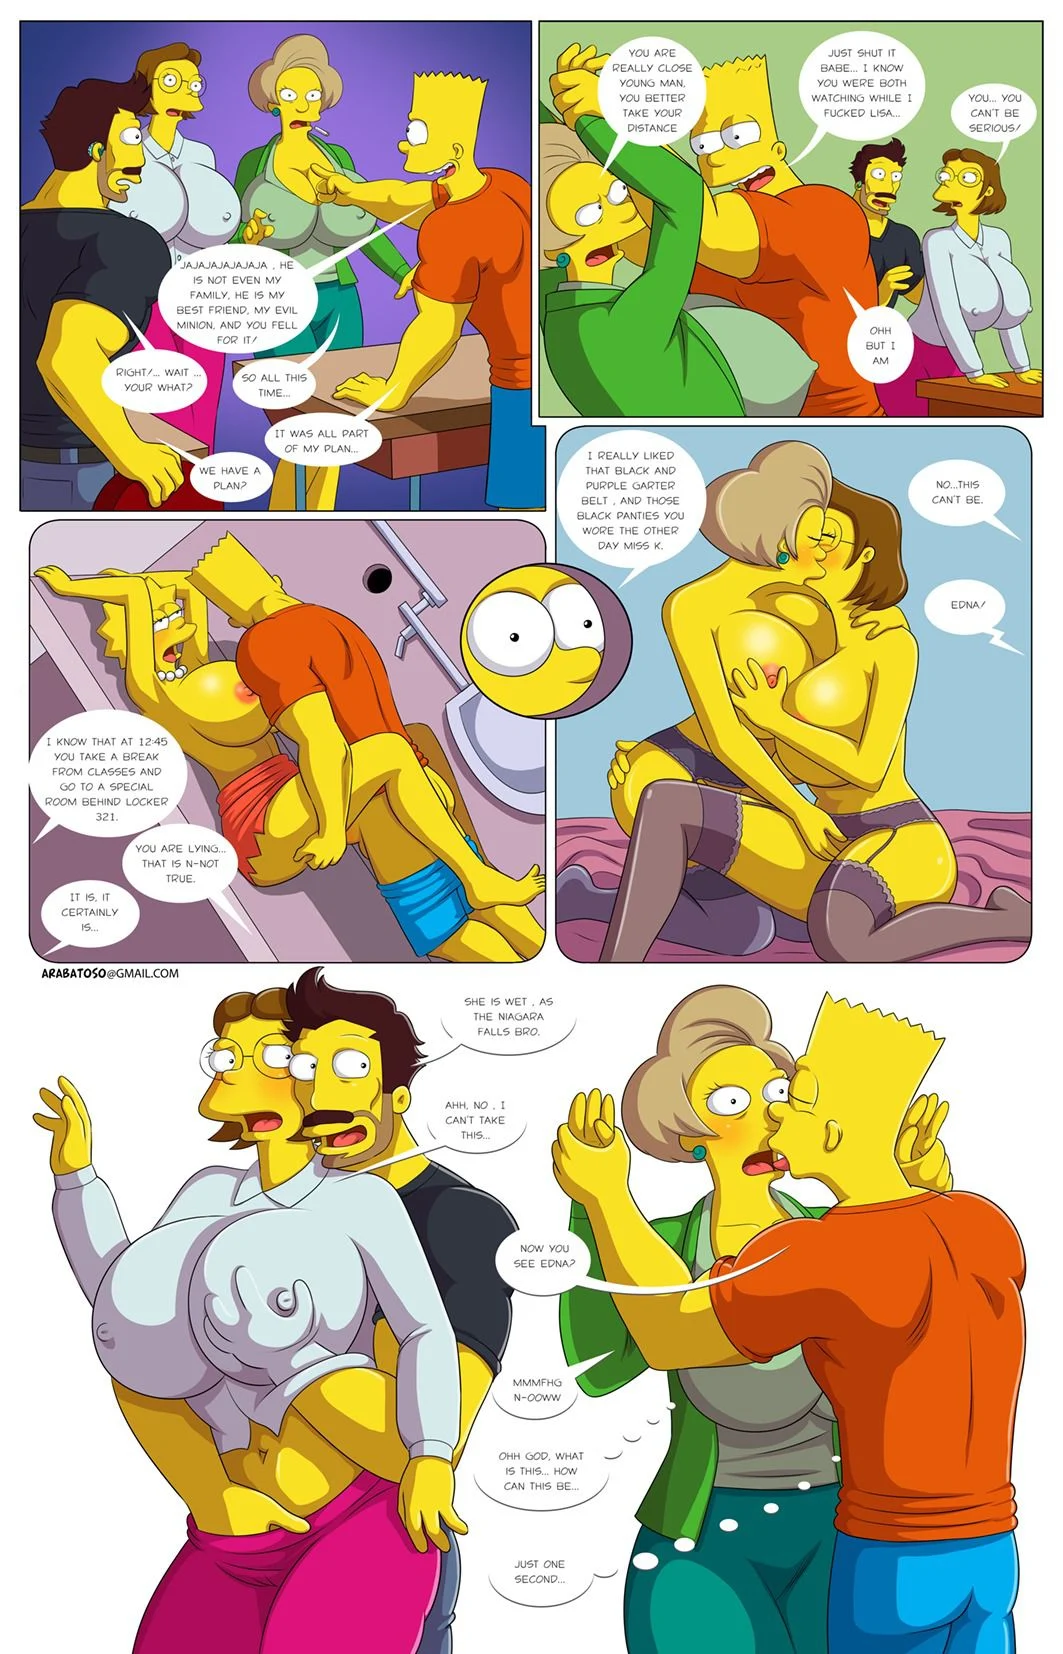 simpsons hentai edna Krabappel r34 porn anime comics sex cartoon xxx